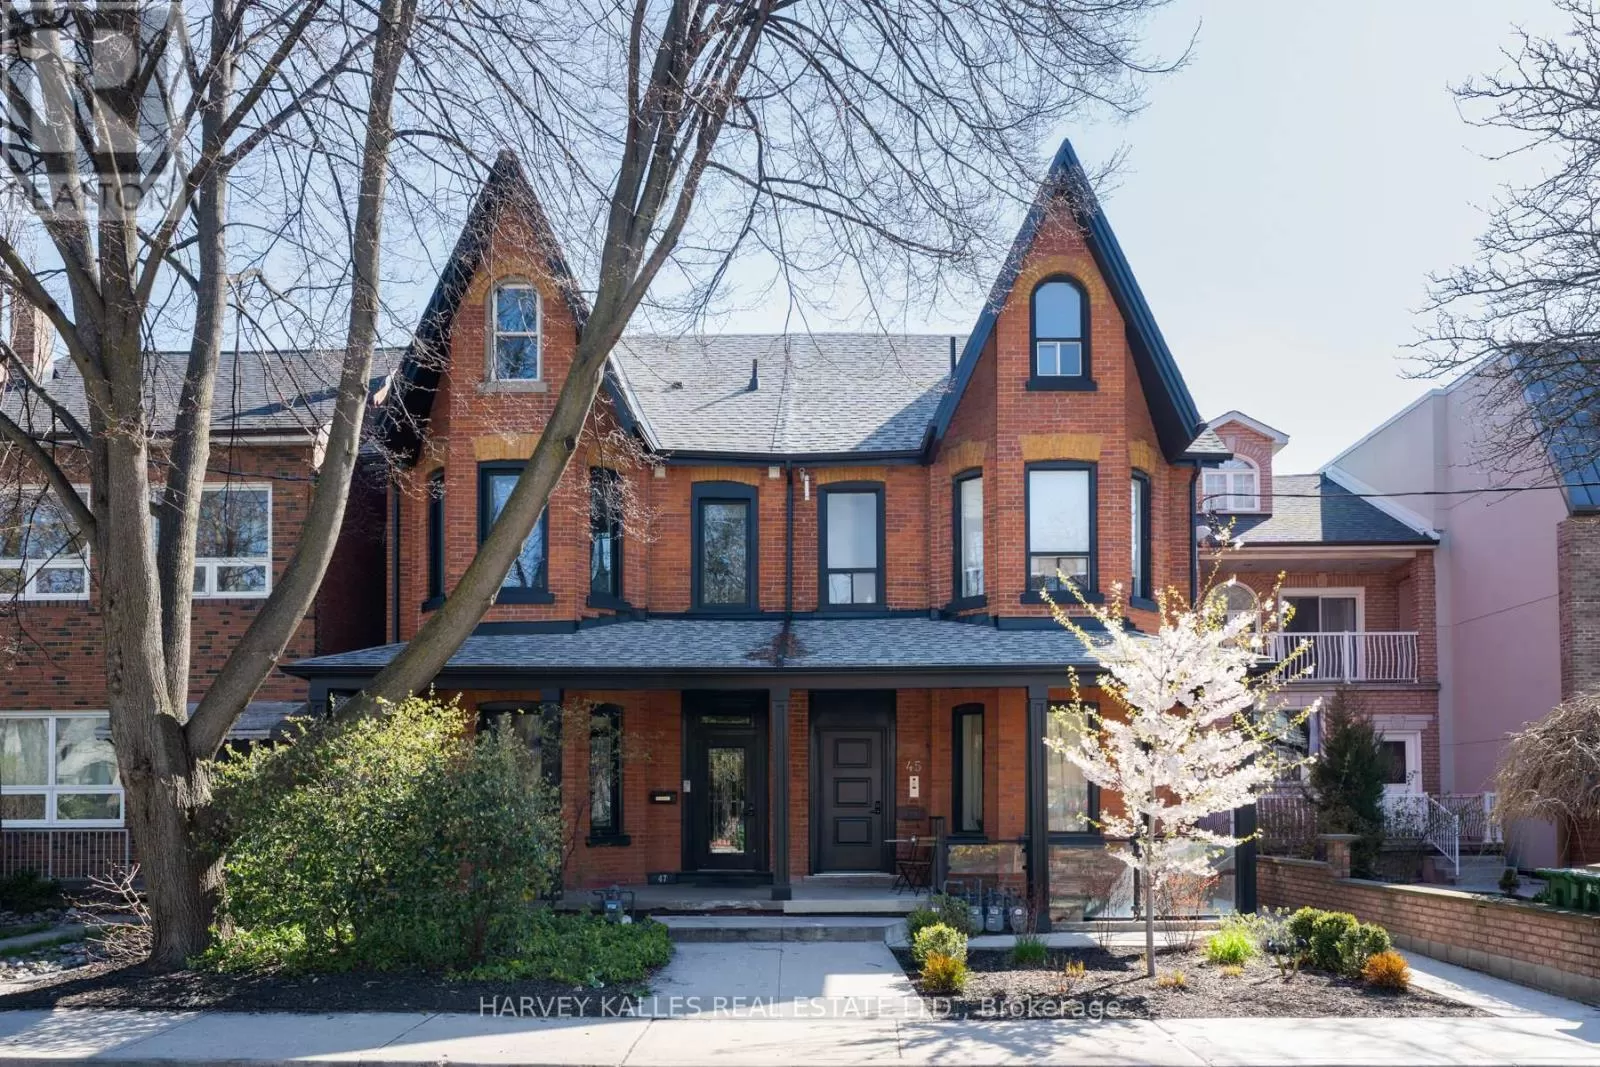 House for rent: 45 Northcote Avenue, Toronto, Ontario M6J 3K2